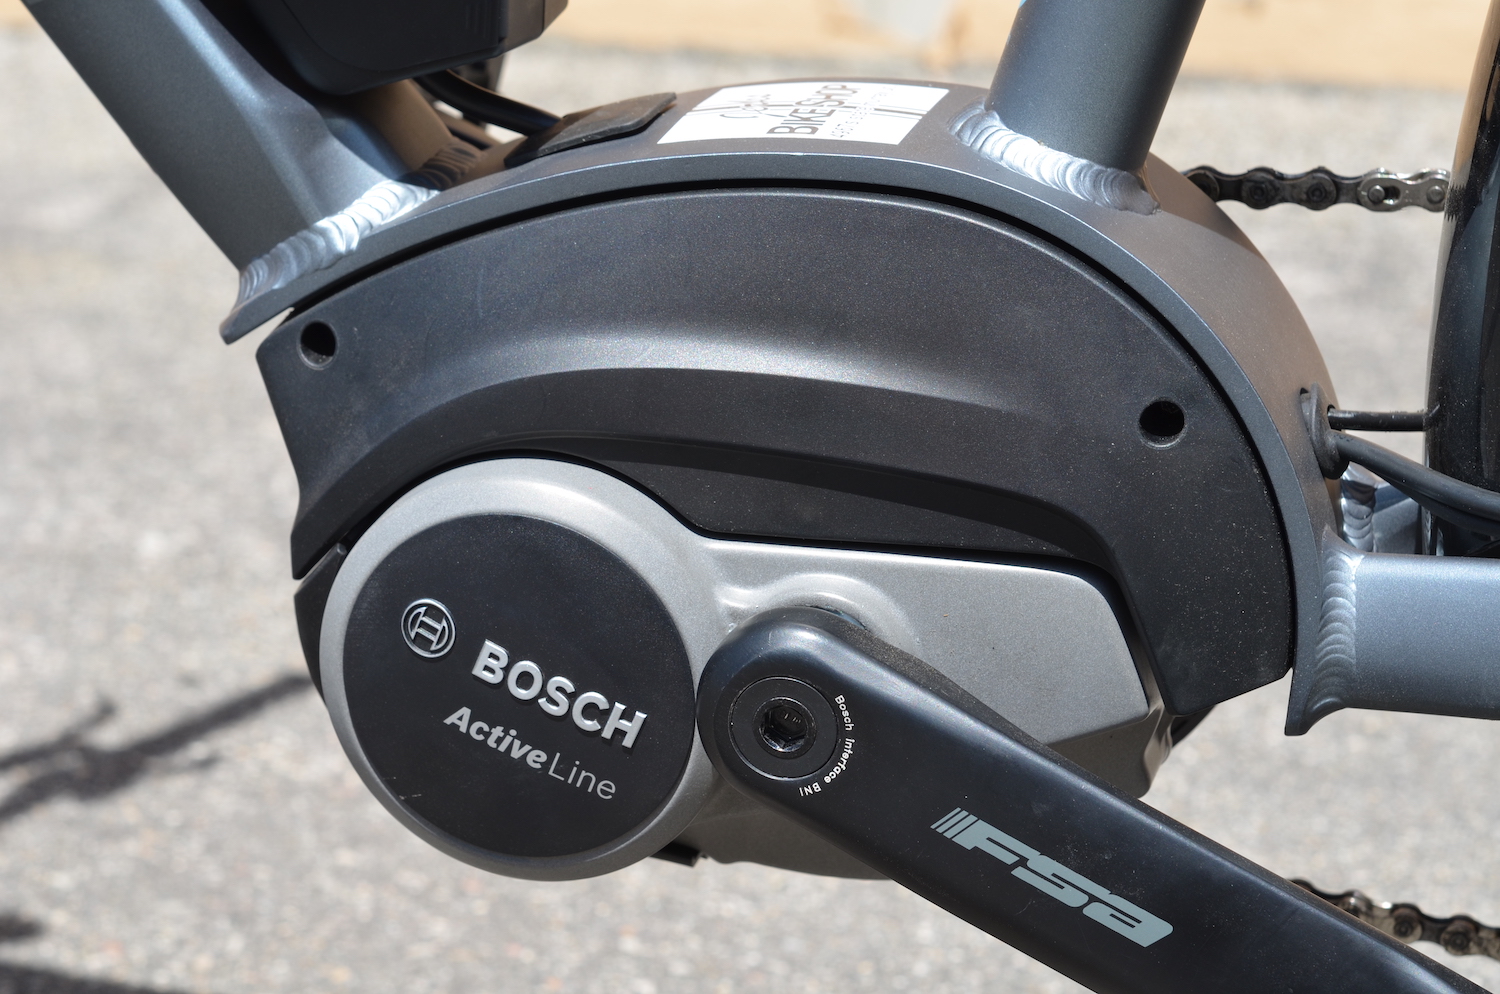 bosch electric bike review